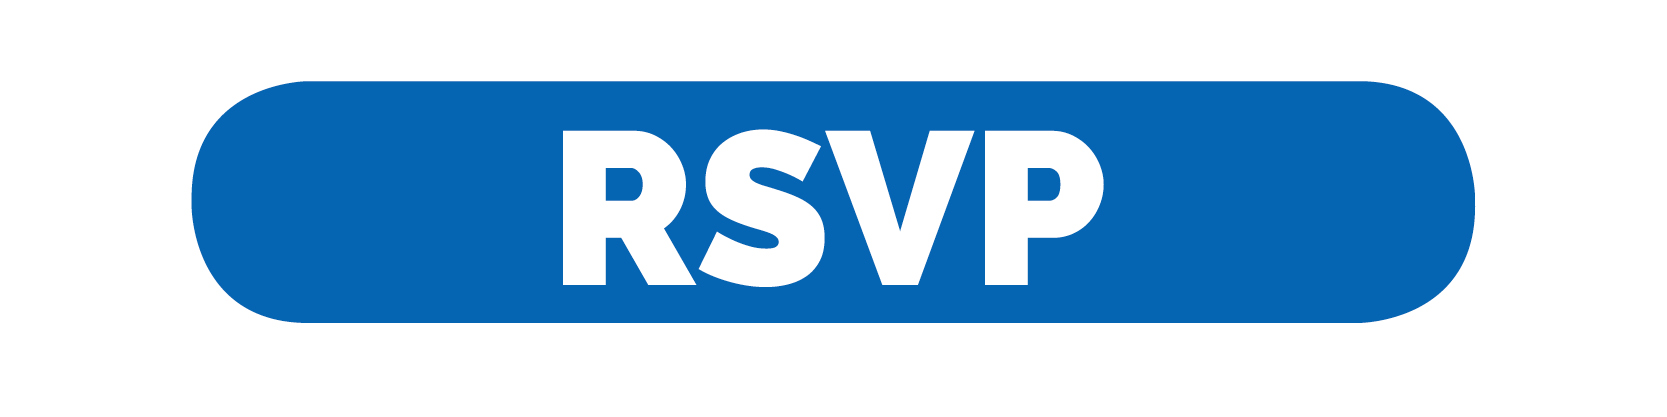 RSVP button blue